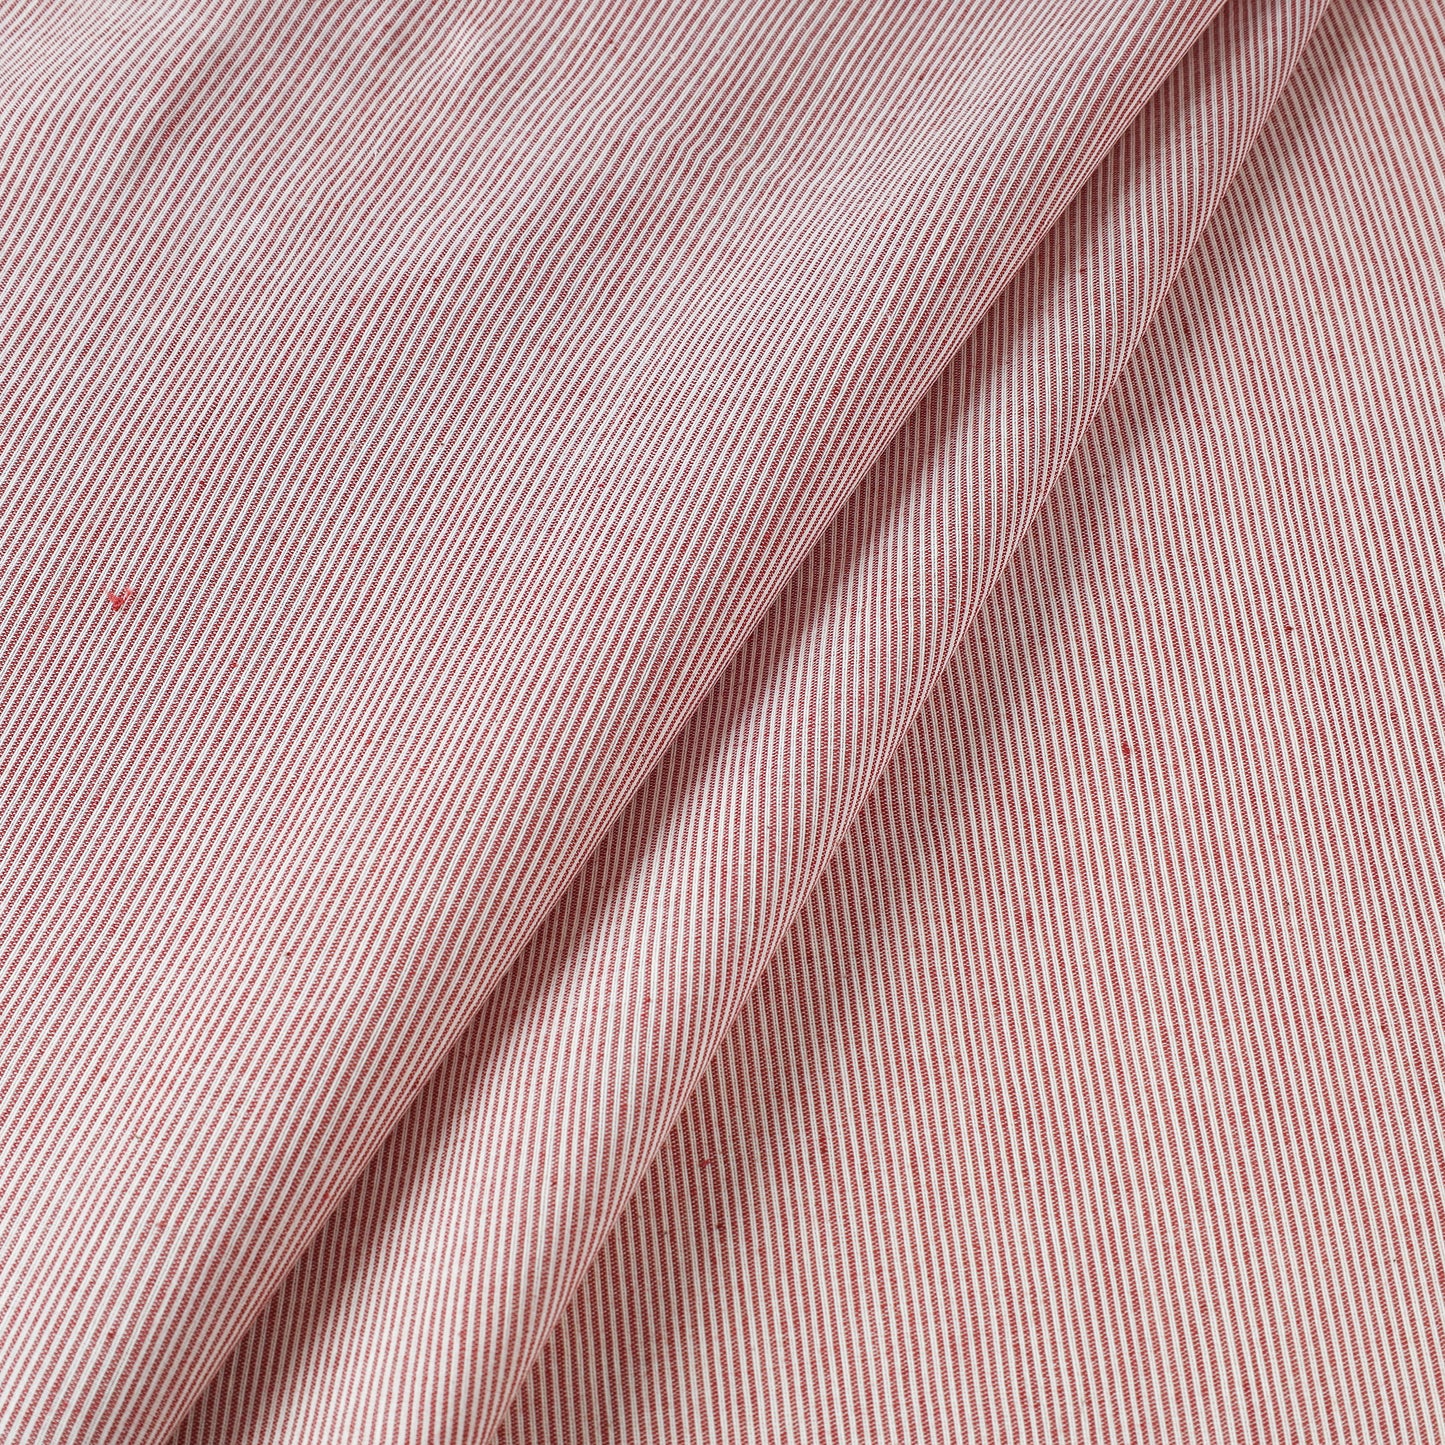 Peach - Mangalagiri Handloom Stripe Cotton Fabric